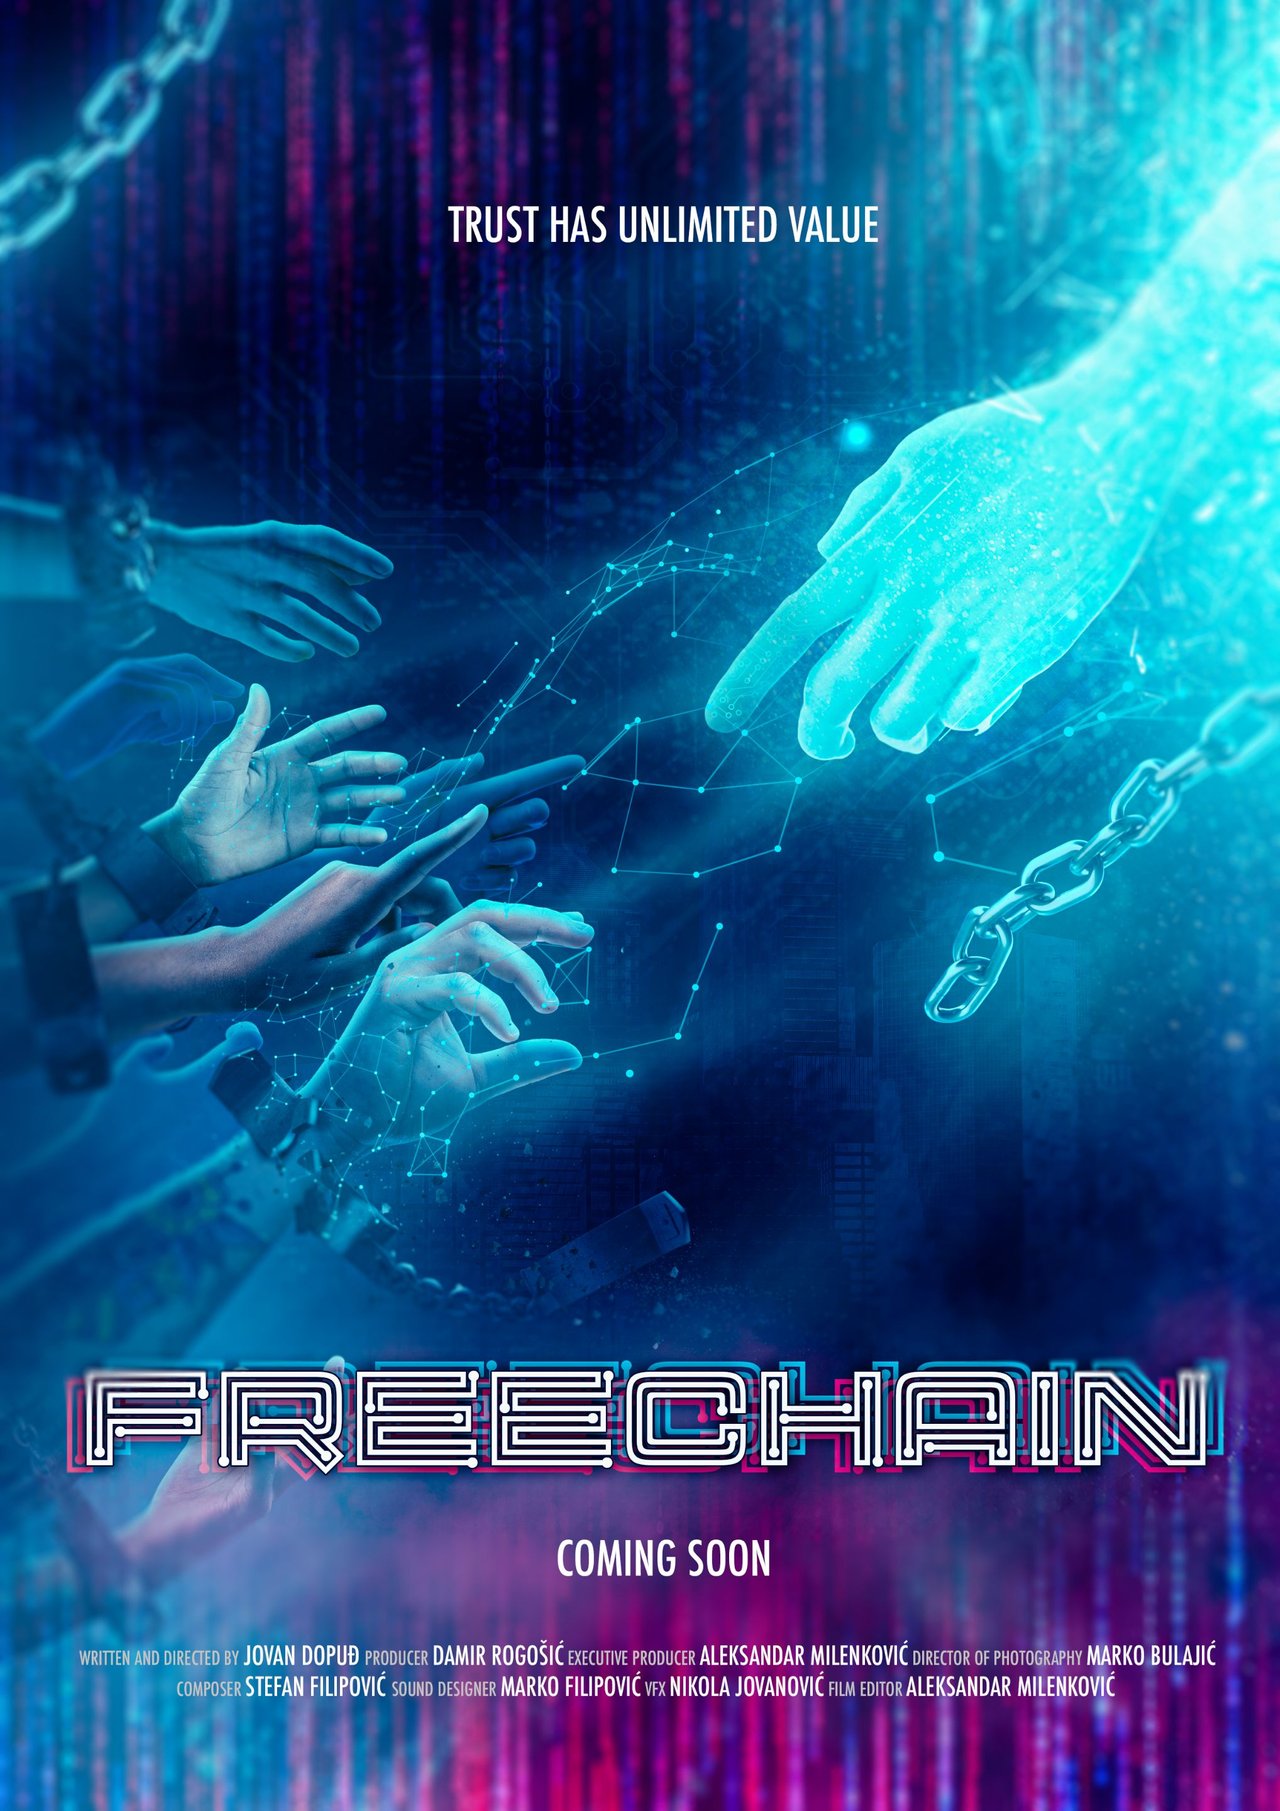 Freechain